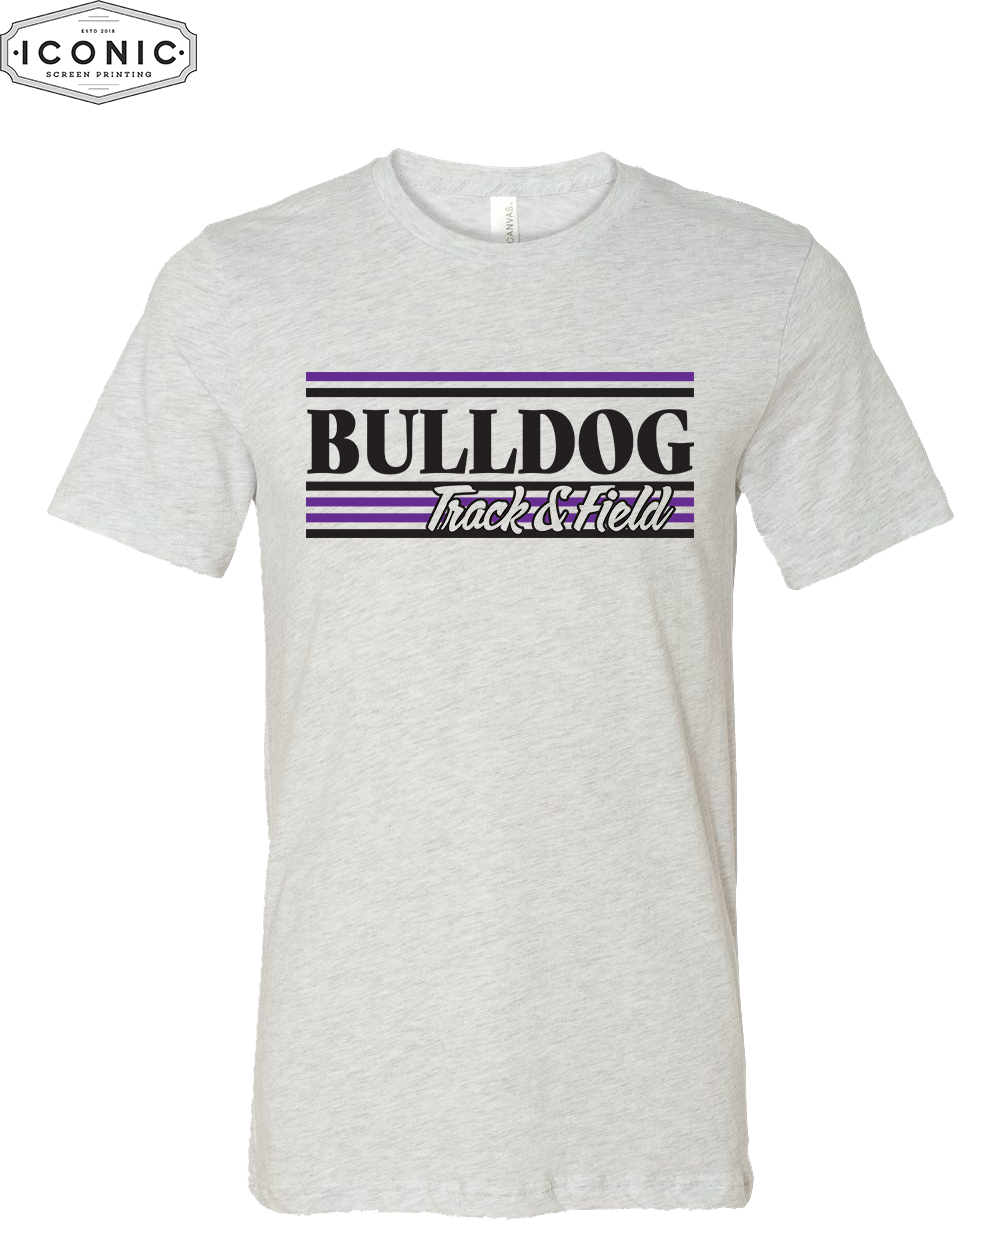 Bulldogs Track & Field - Unisex Jersey Tee